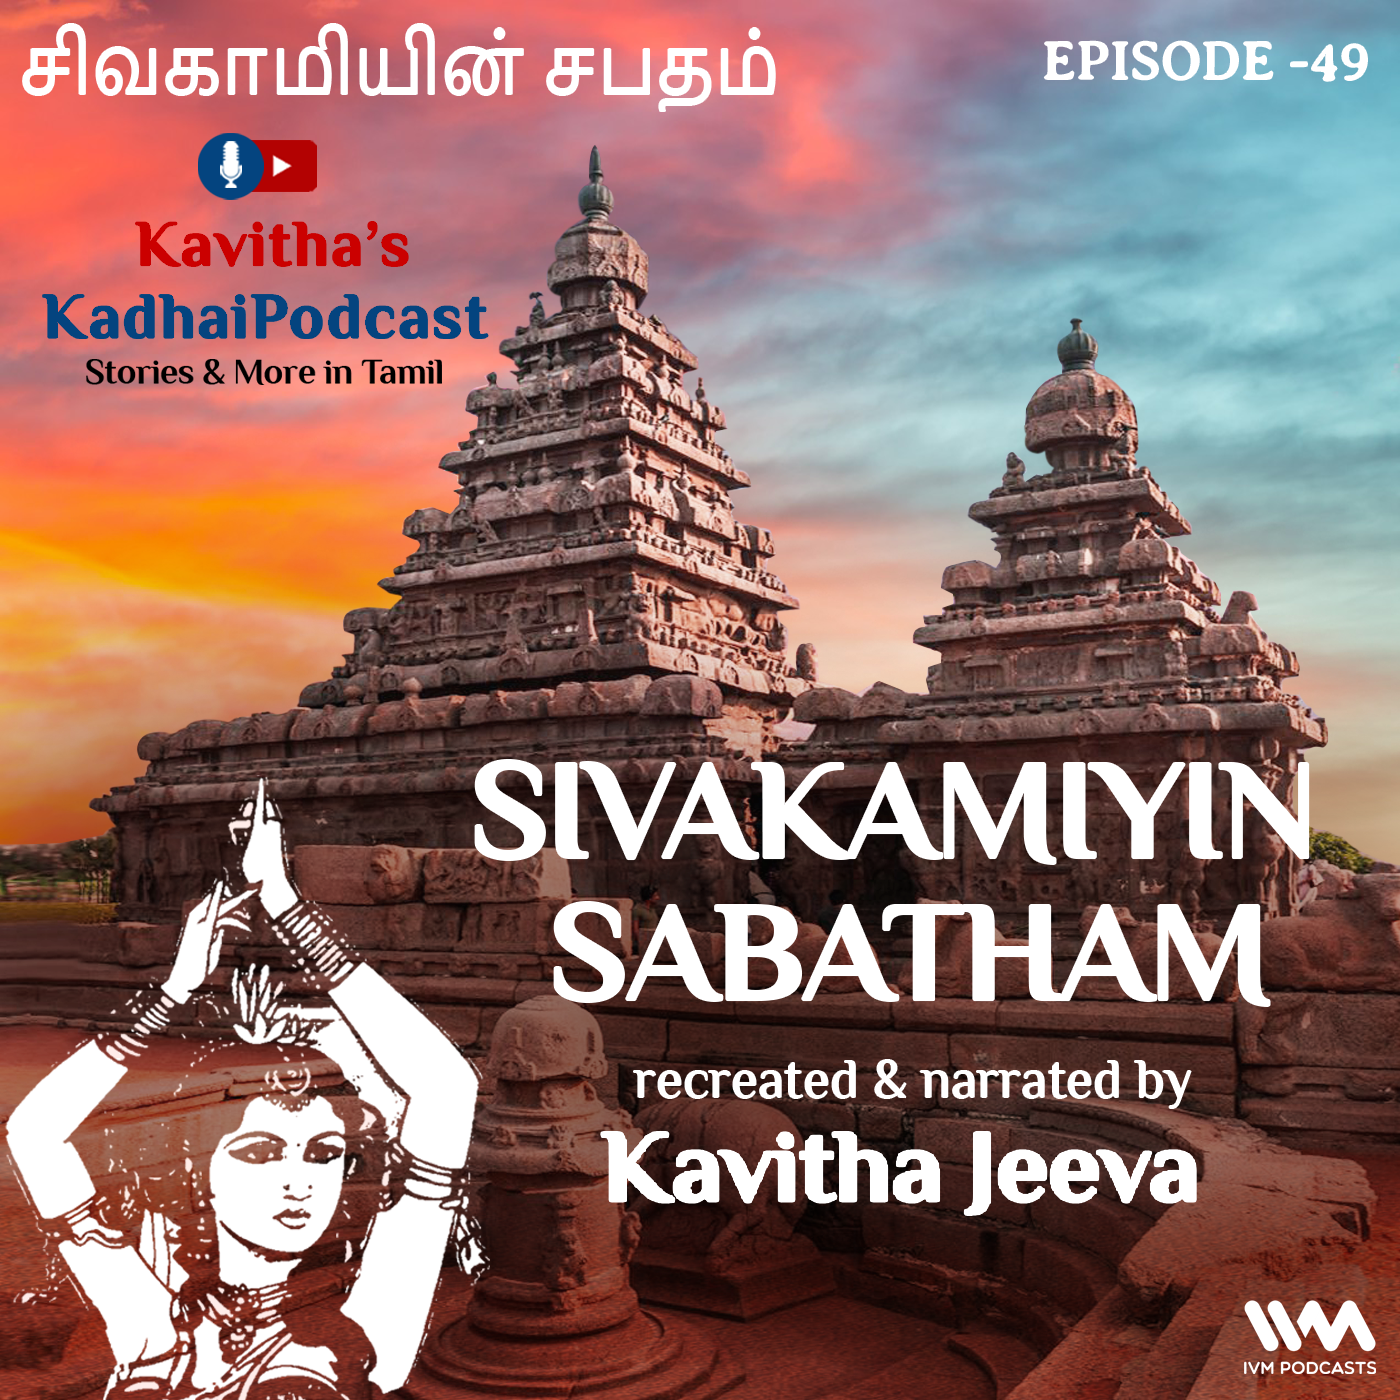 KadhaiPodcast's Sivakamiyin Sabatham - Episode # 49